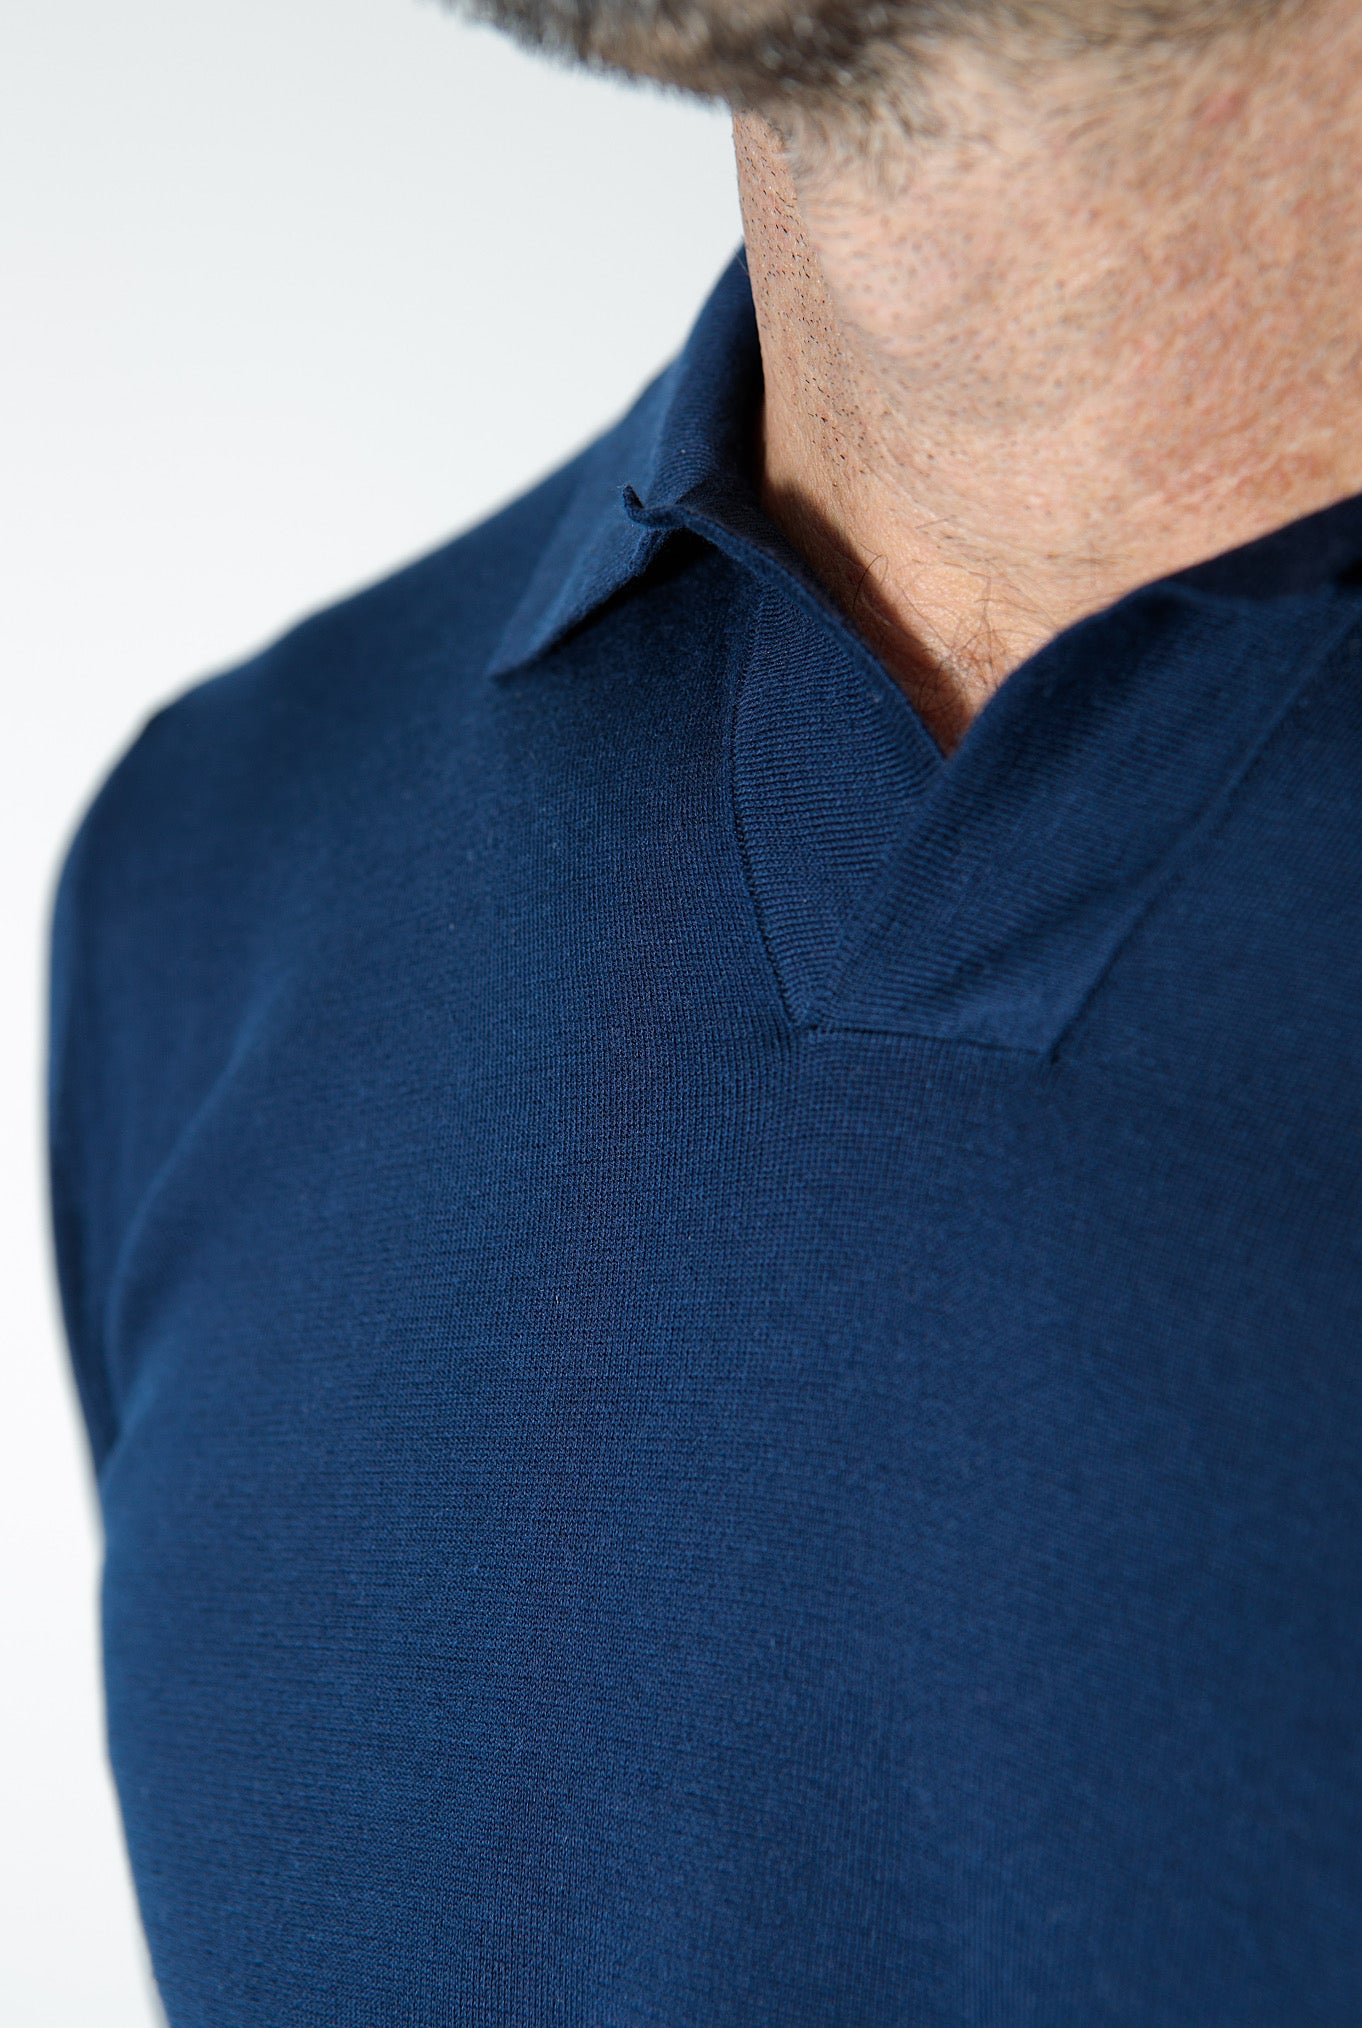 GUARINO Blue Sea Island cotton long-sleeved polo shirt